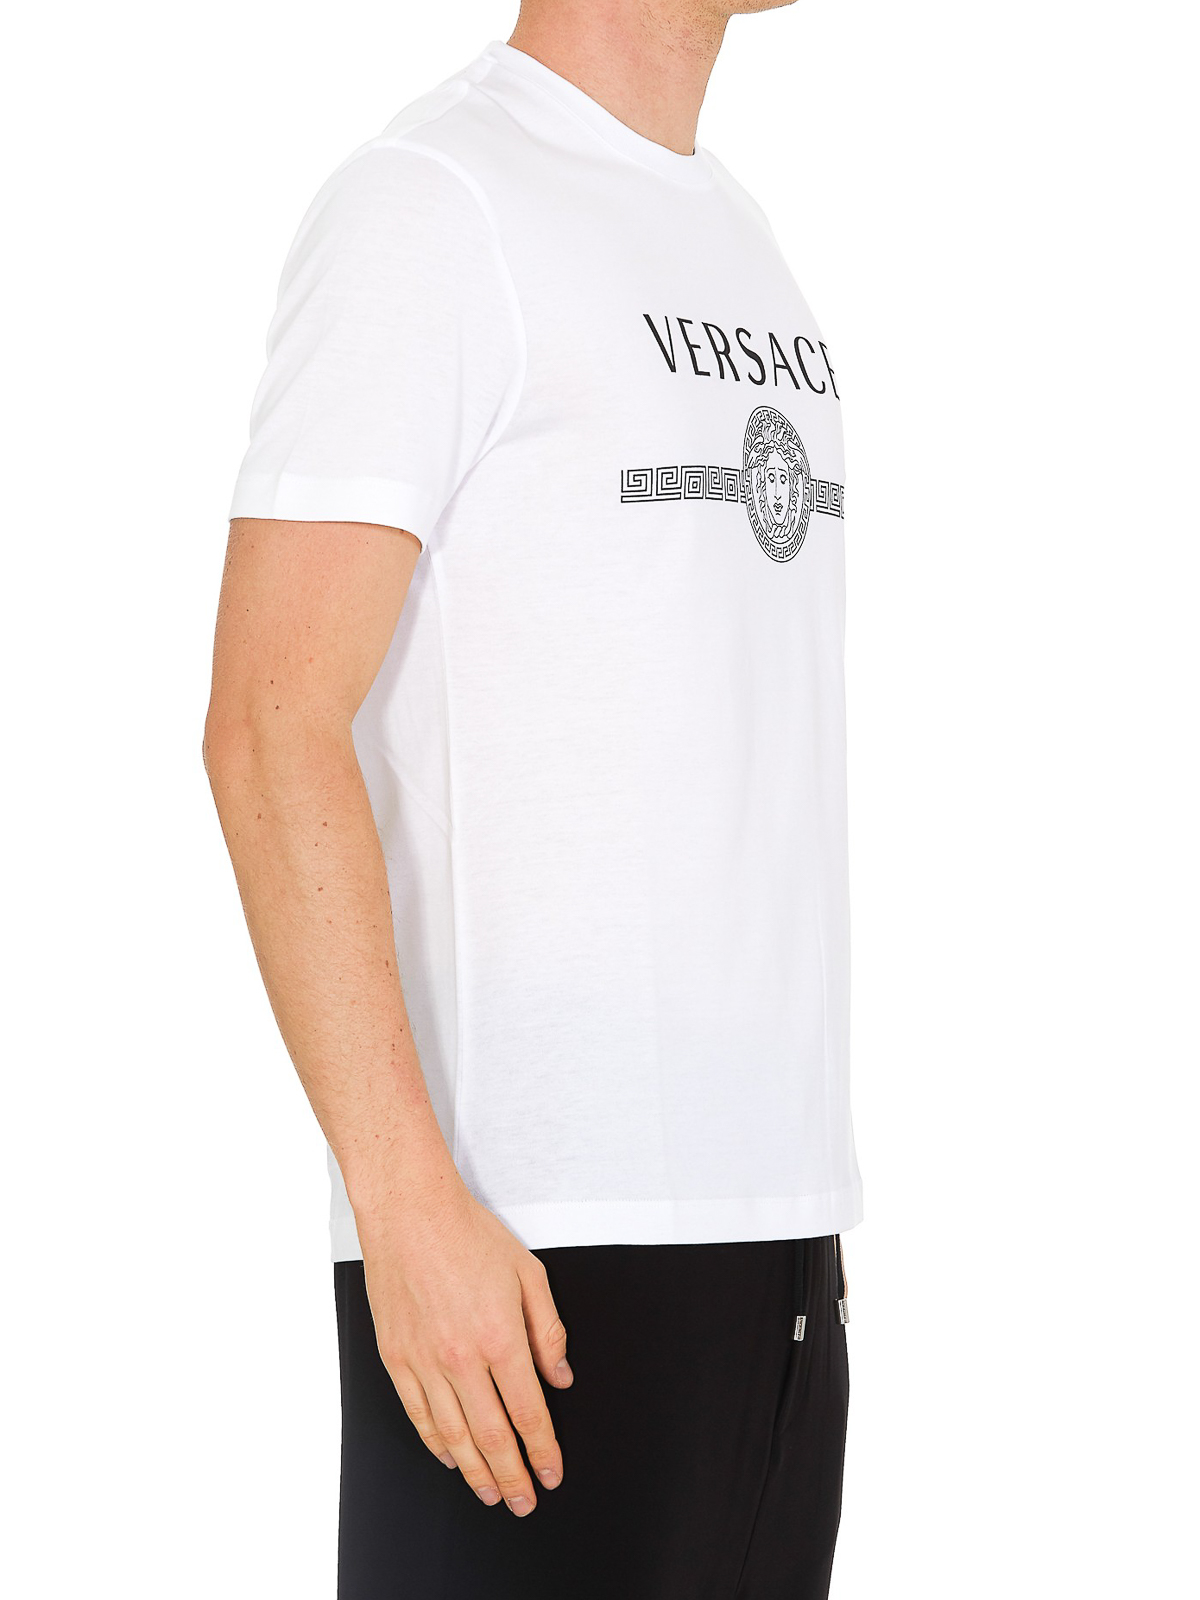 Læne kulstof Grundlægger T-shirts Versace - Medusa Head and logo print white T-shirt -  A83159A228806A1001